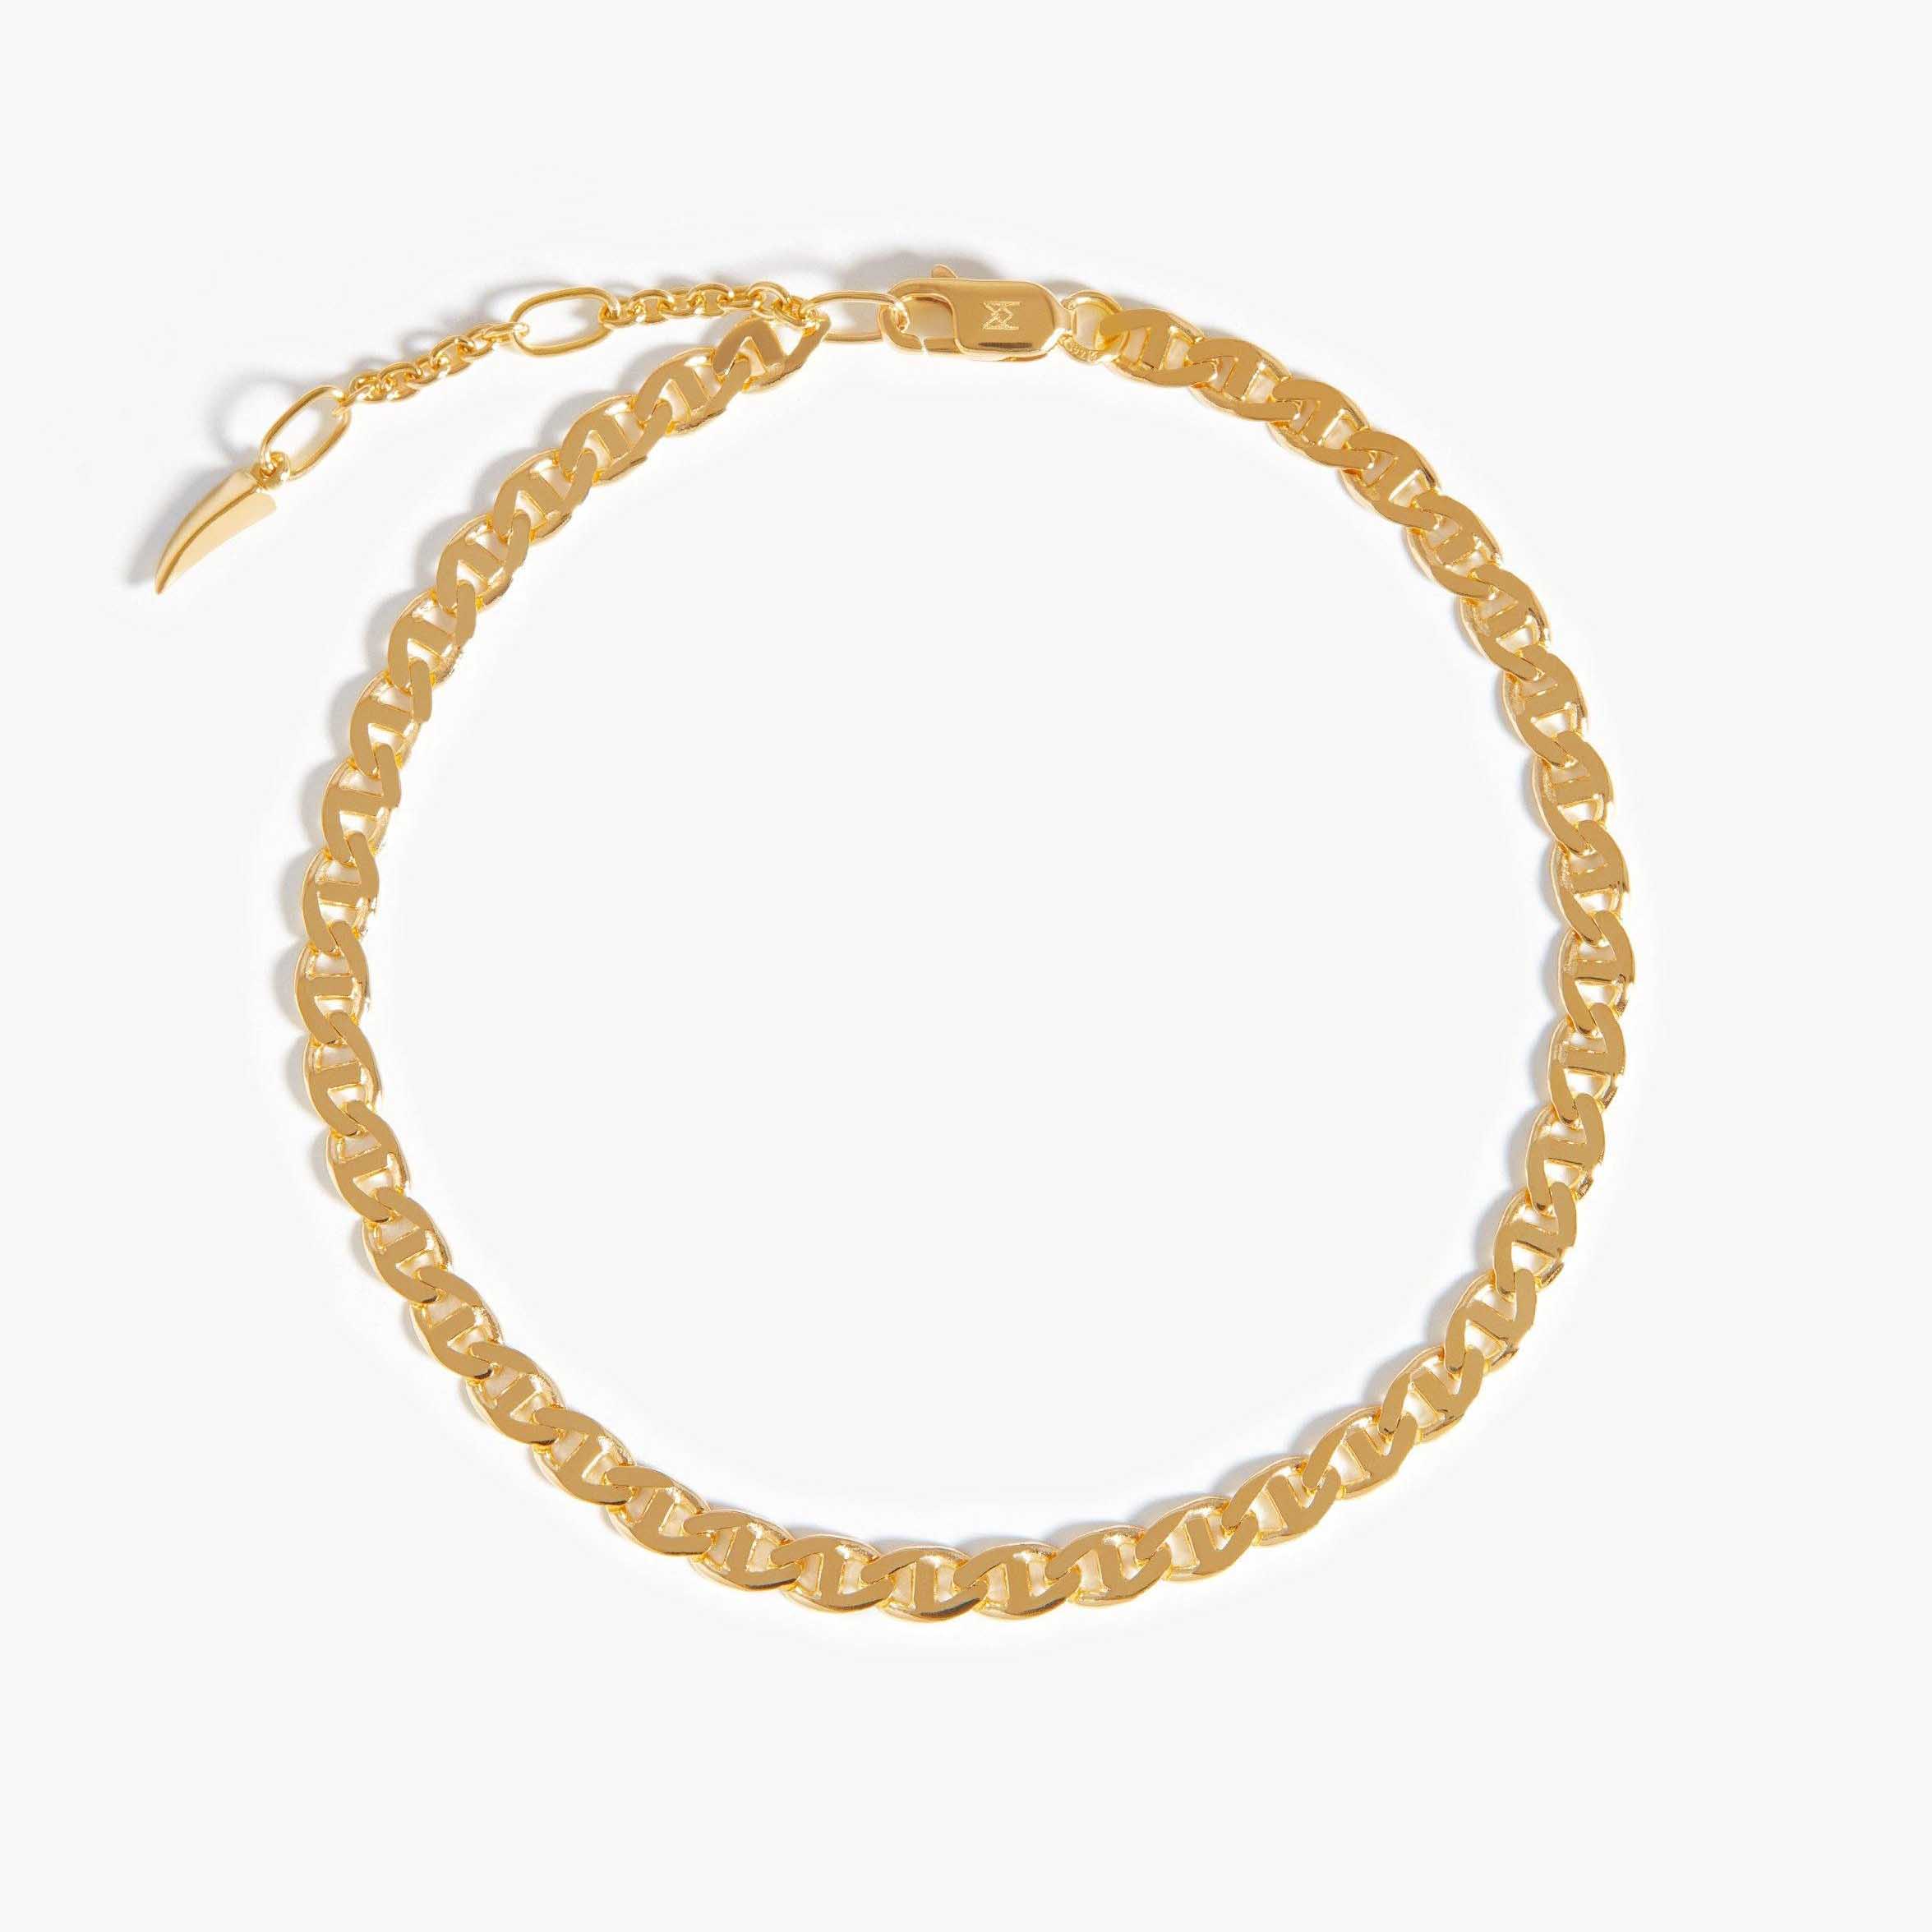 make custom designed jewelry supplier for chain bracelet in 18k gold plated